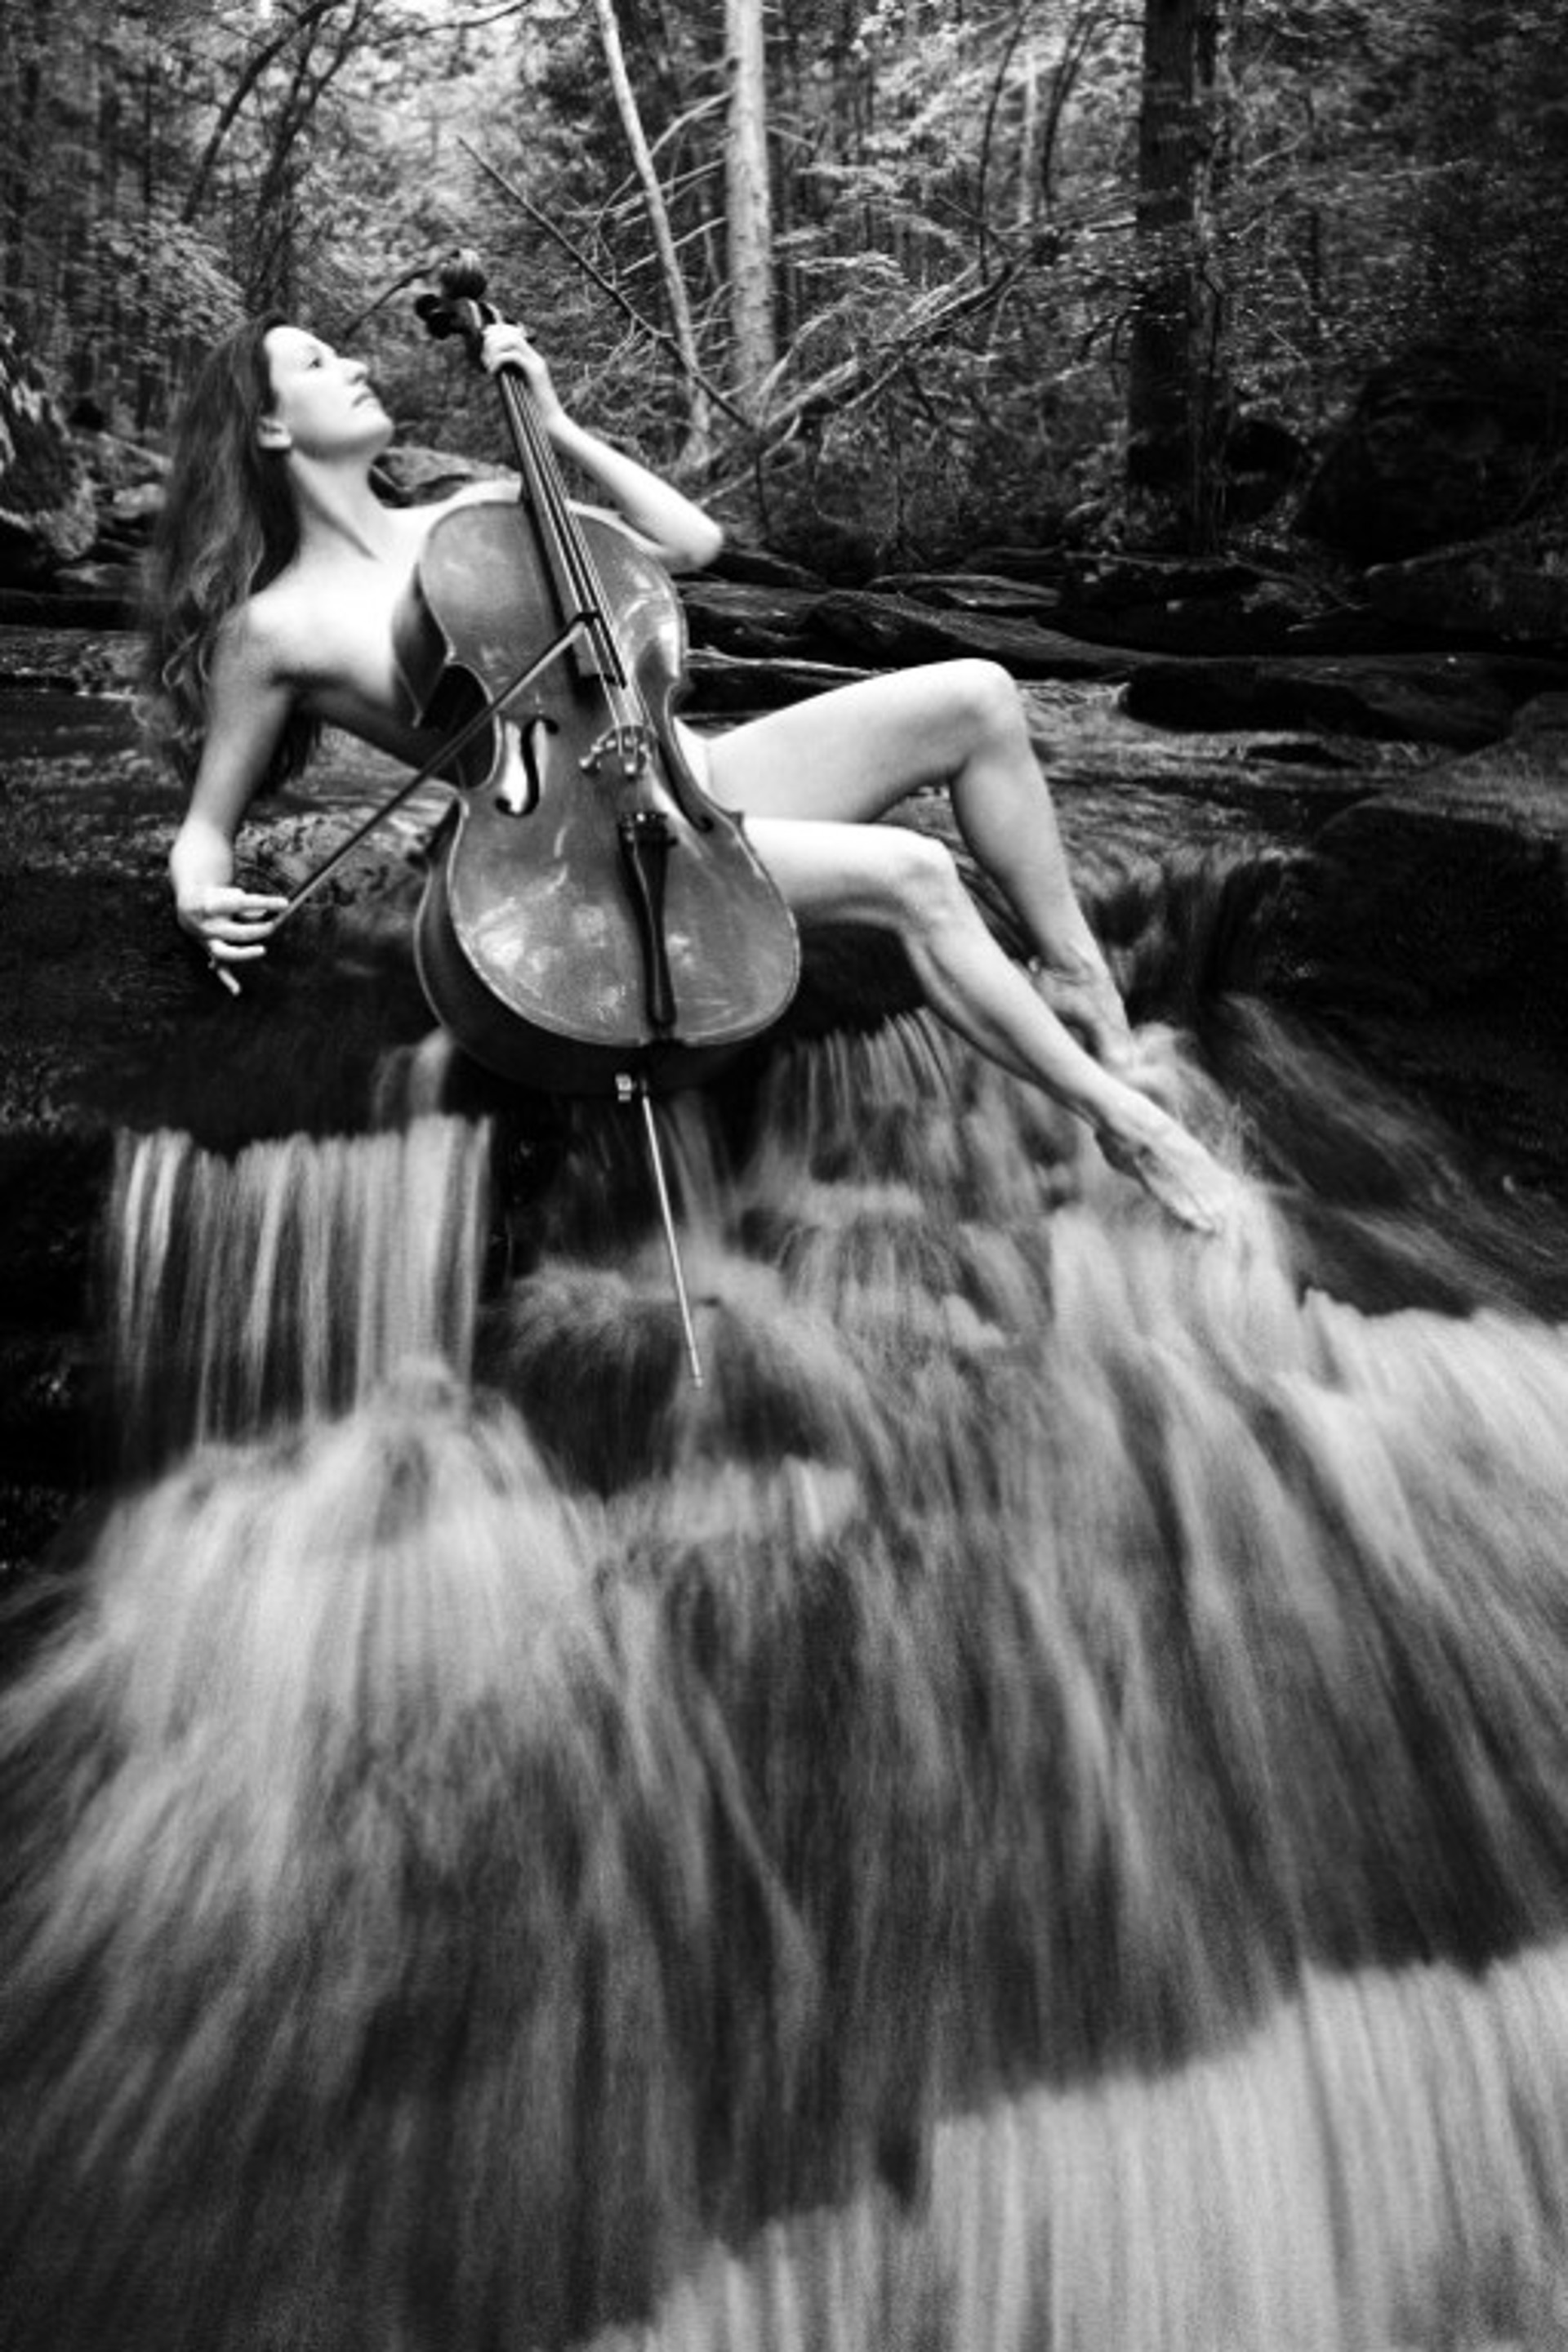 Water Music (Caroline) by Florin Firimita